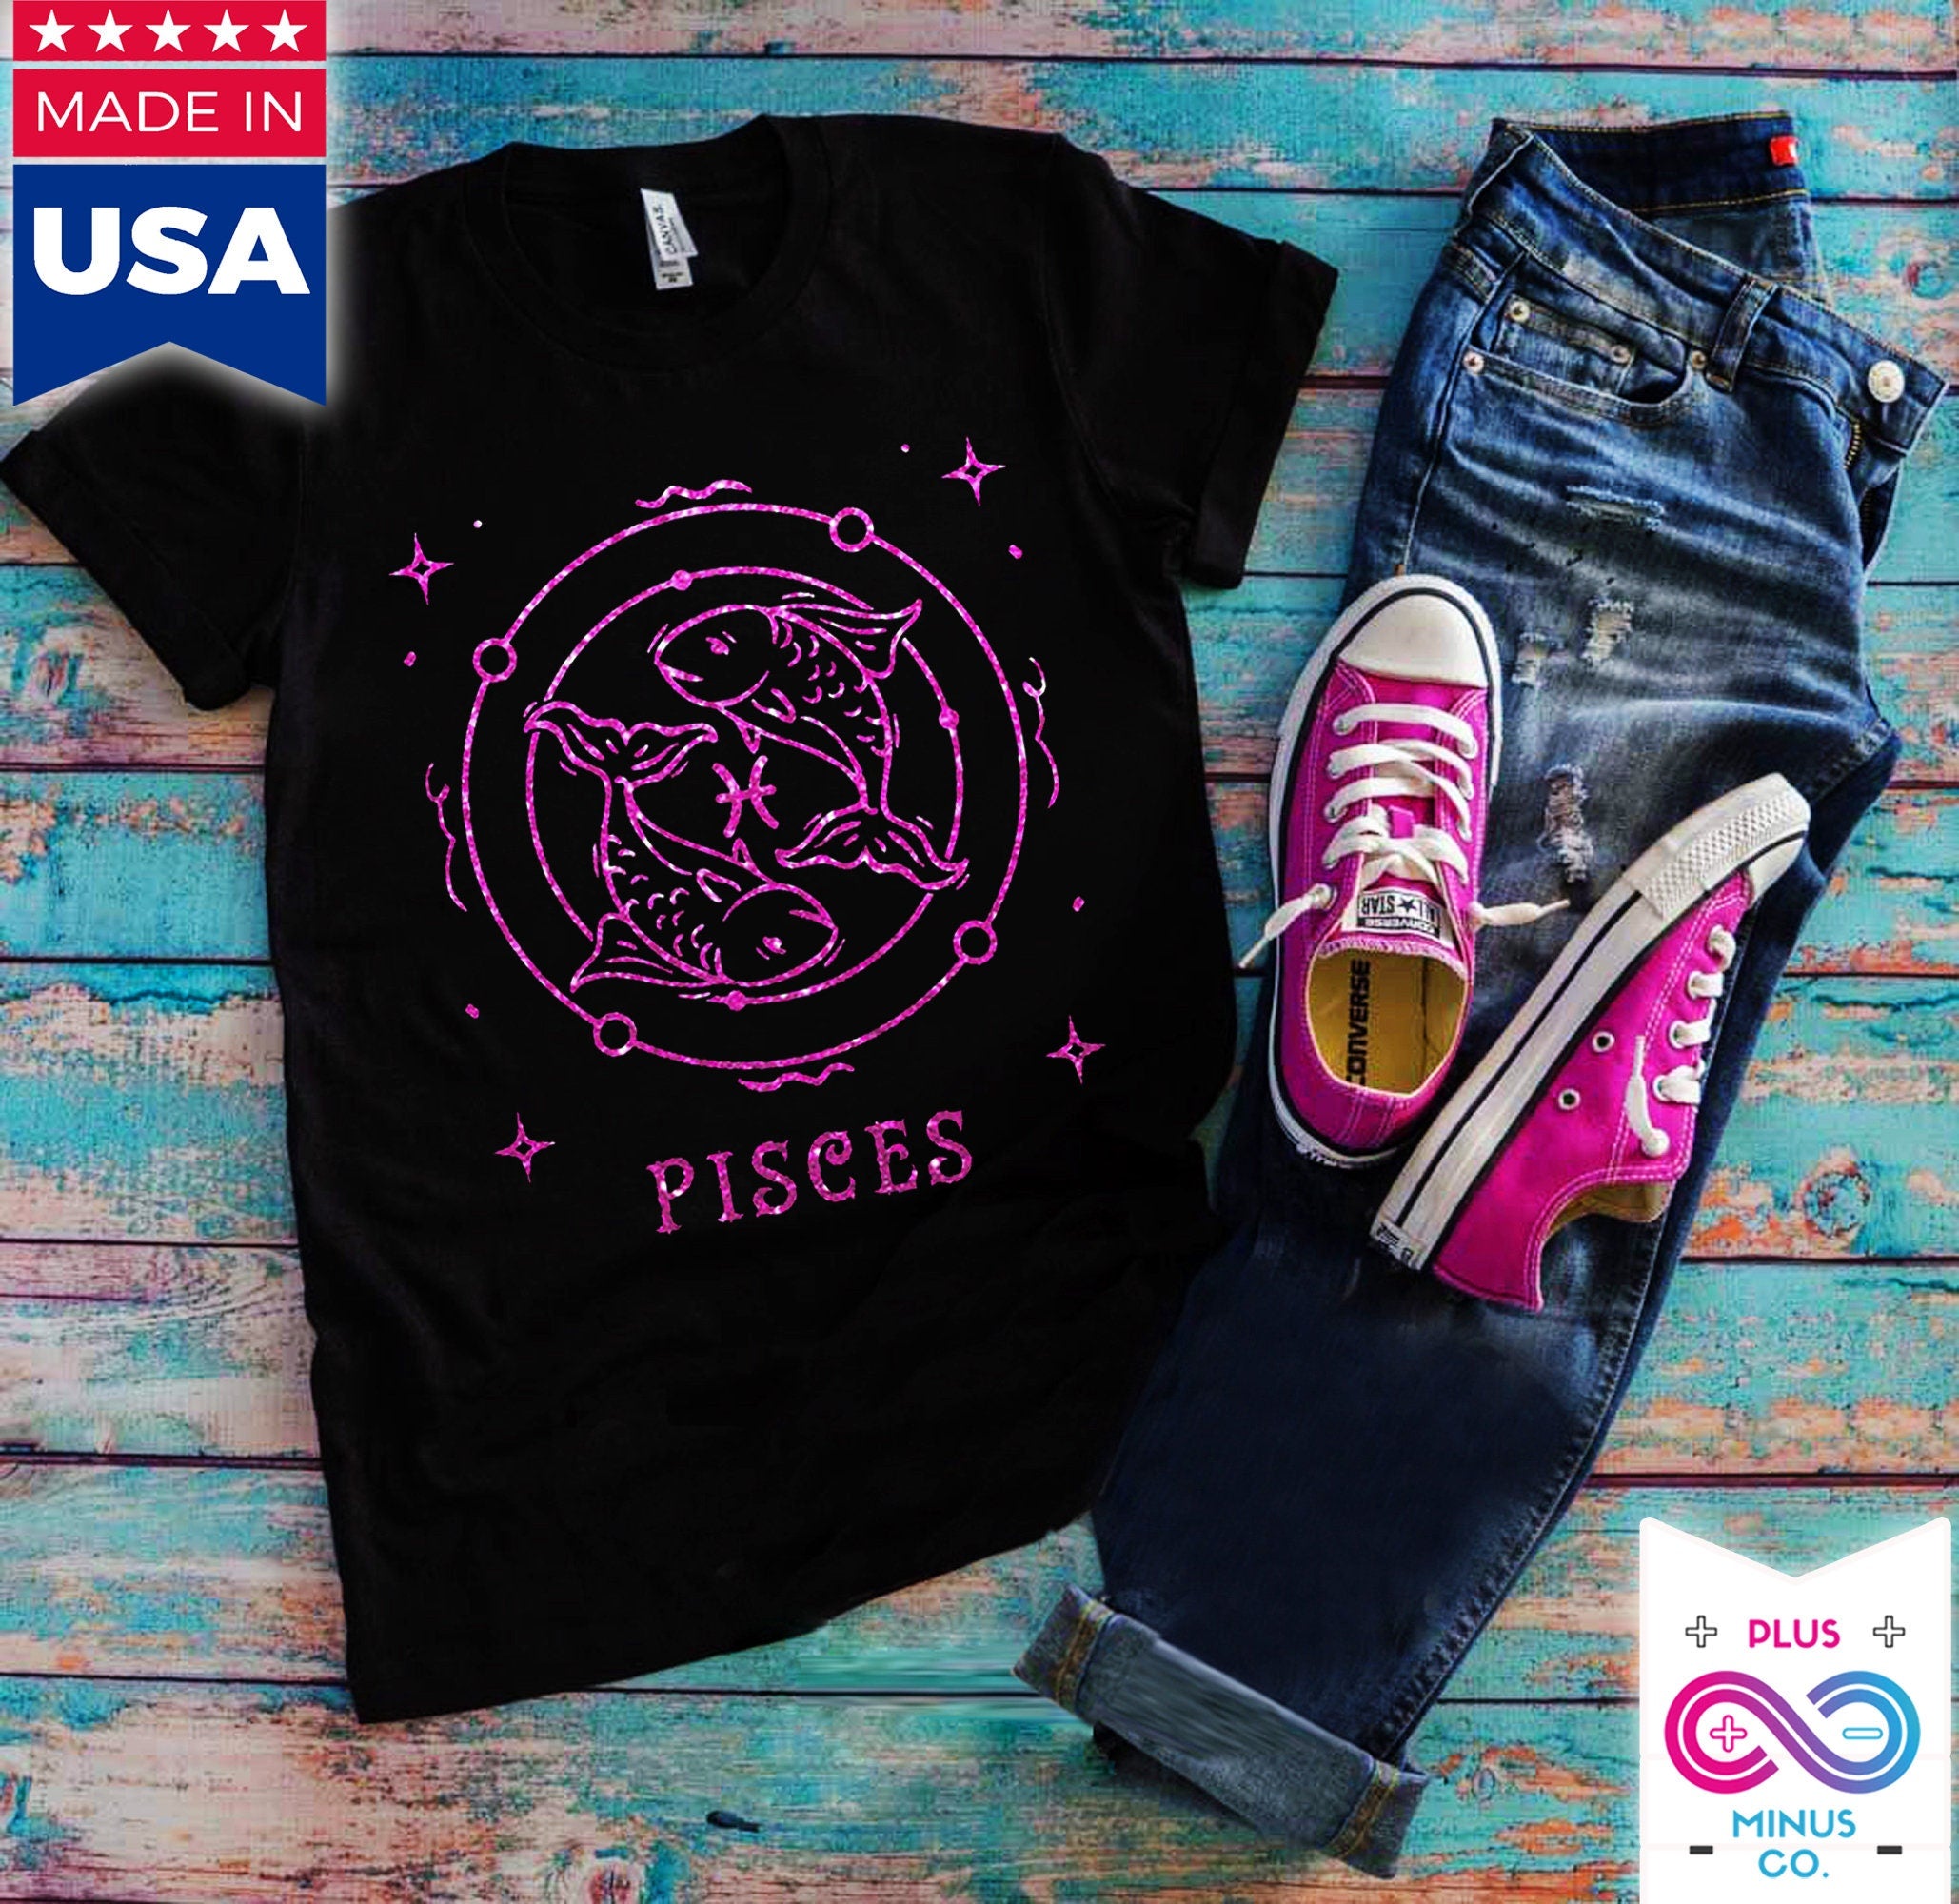 Pisces T-Shirts, Zodiac Shirt, Astrology Shirt, Gift for Pisces, Pisces Birthday Present, Zodiac Signs, Horoscopes Tee, Valentine Shirt - plusminusco.com